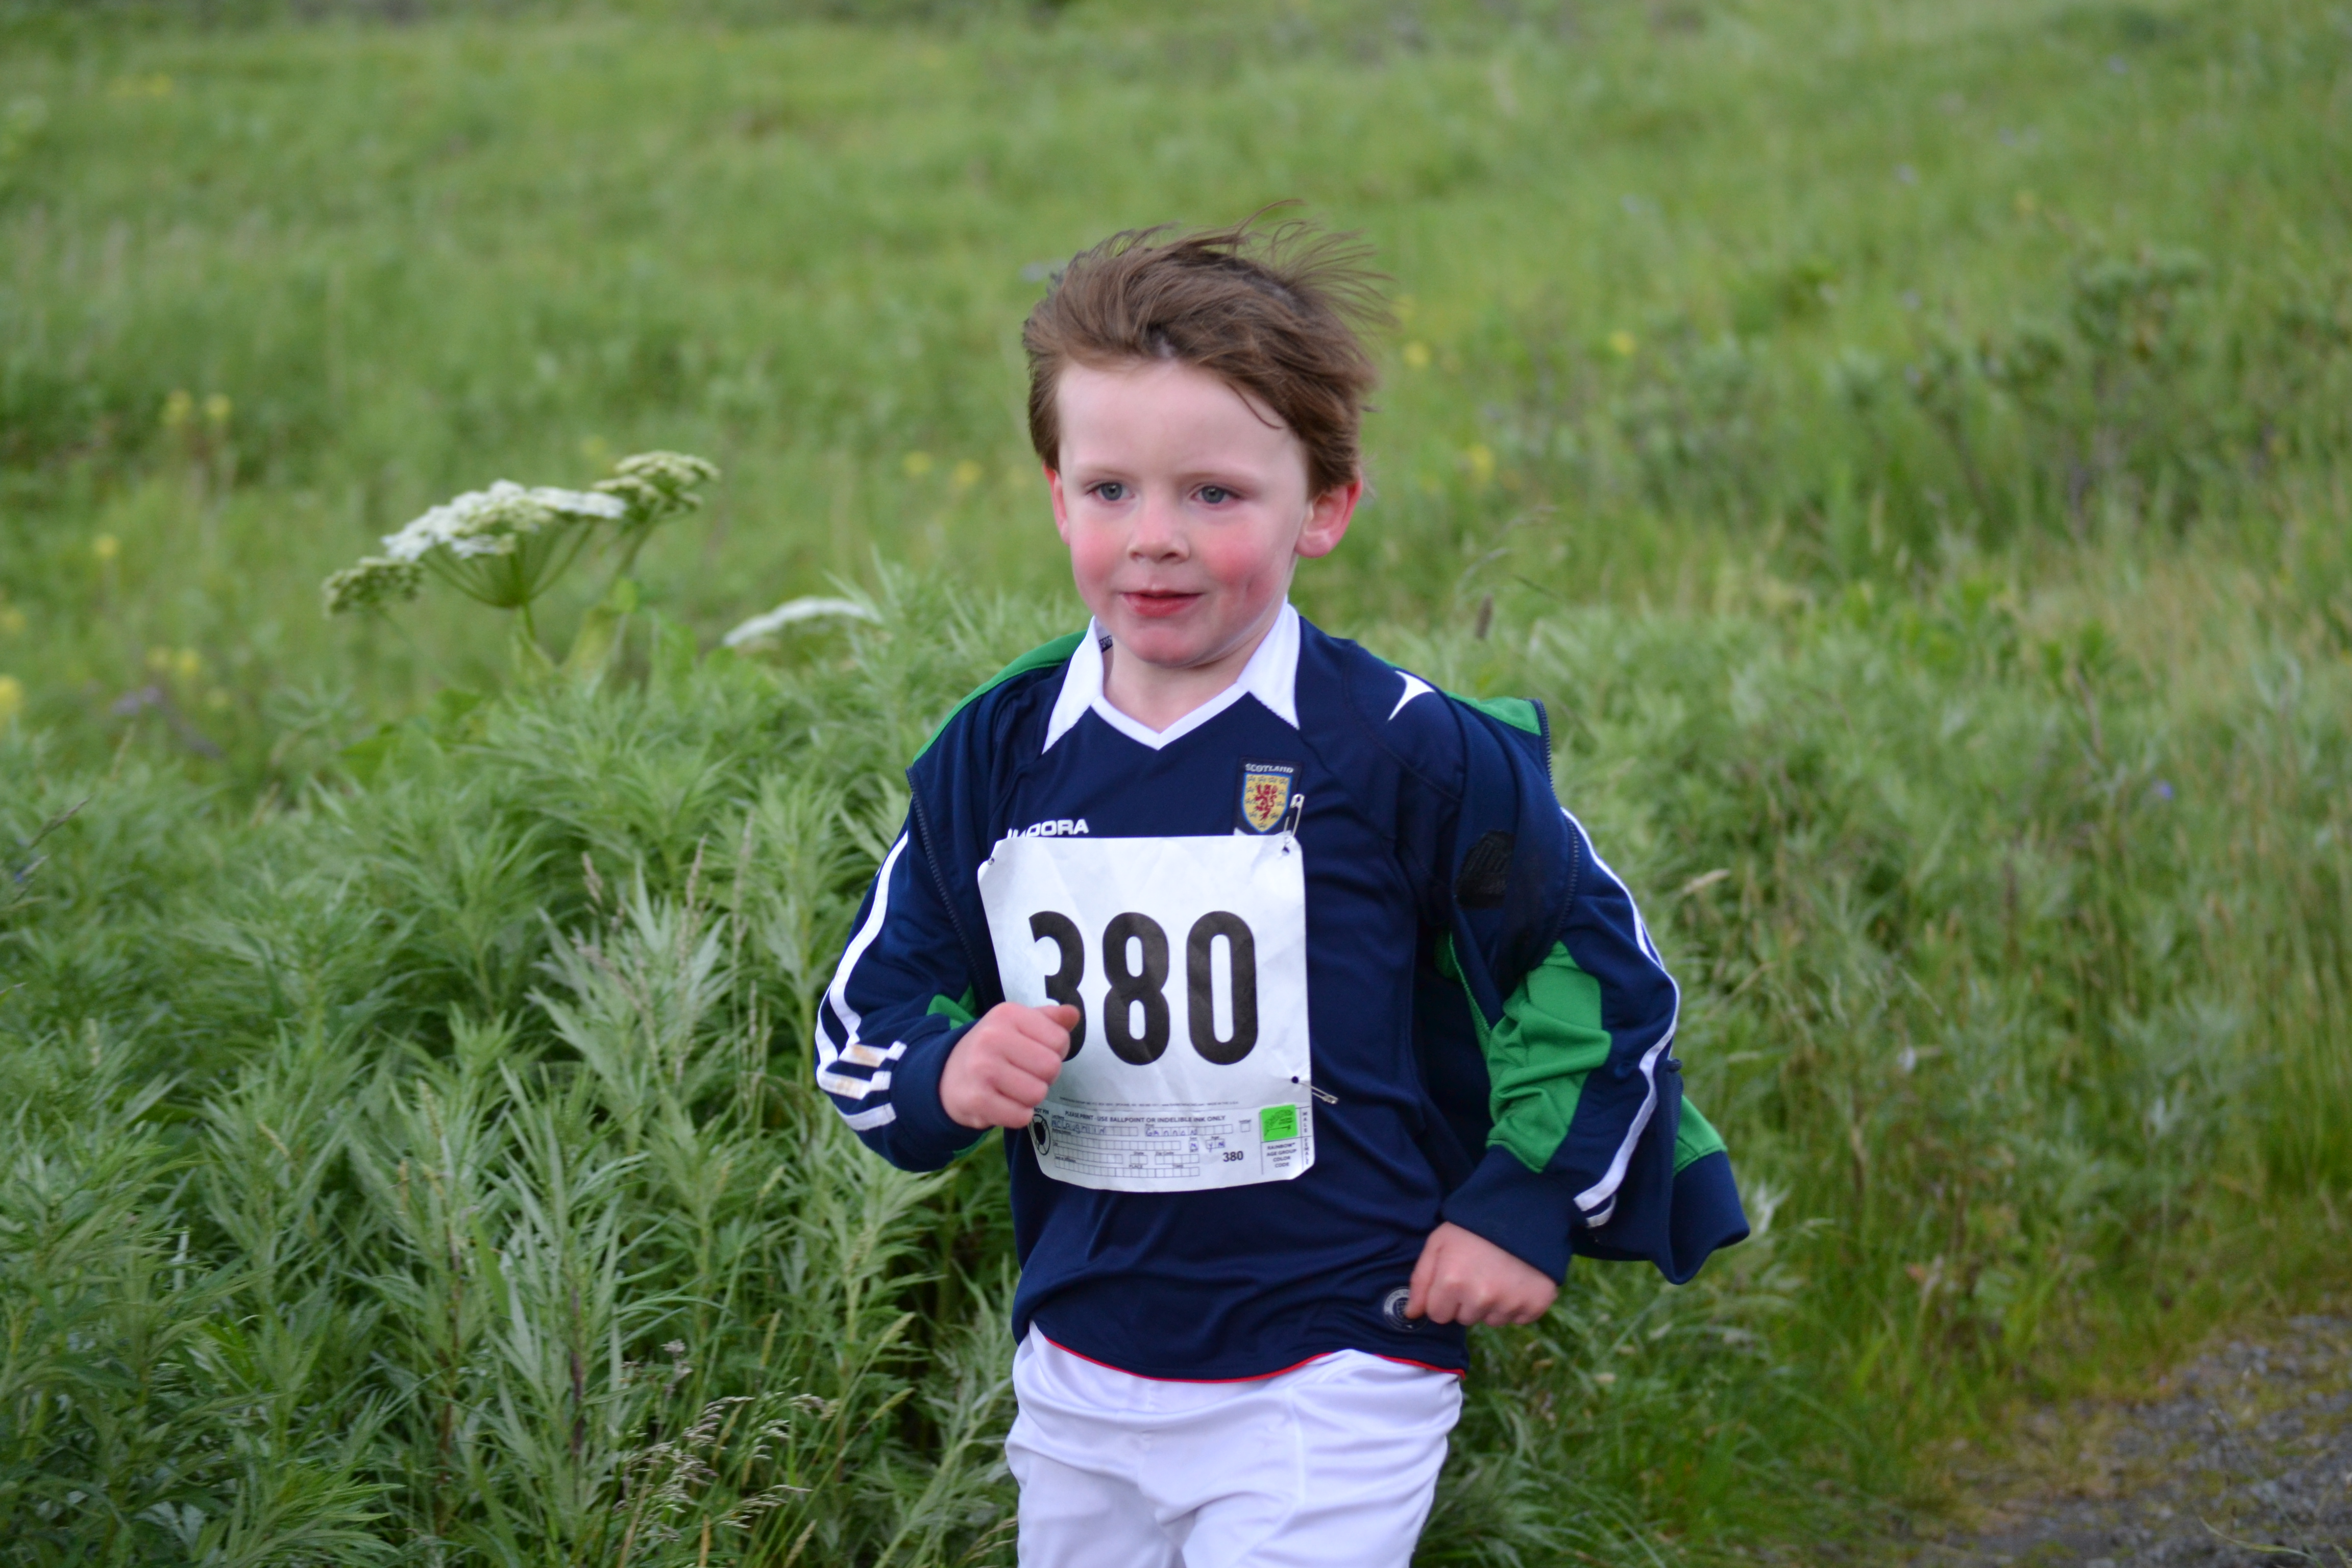 Ballyhoo Run Participant (Photograph by Albert Burnham)